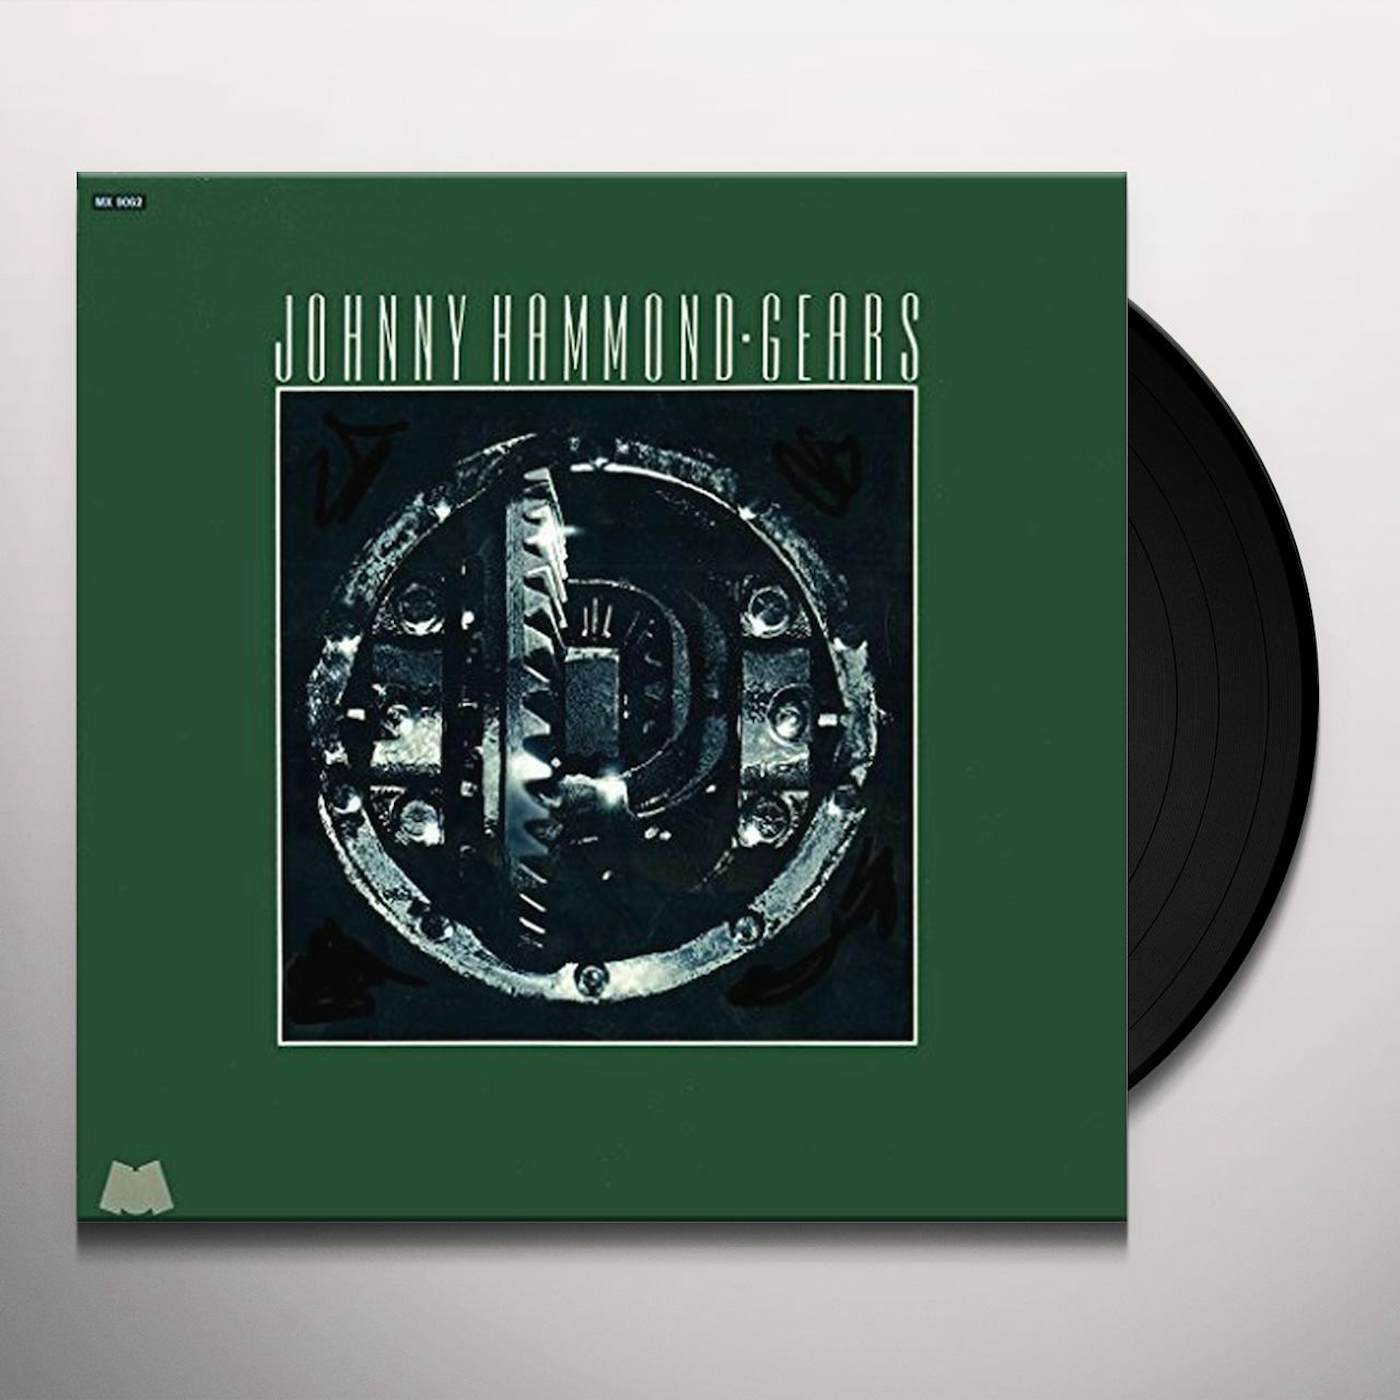 Johnny "Hammond" Smith Gears Vinyl Record